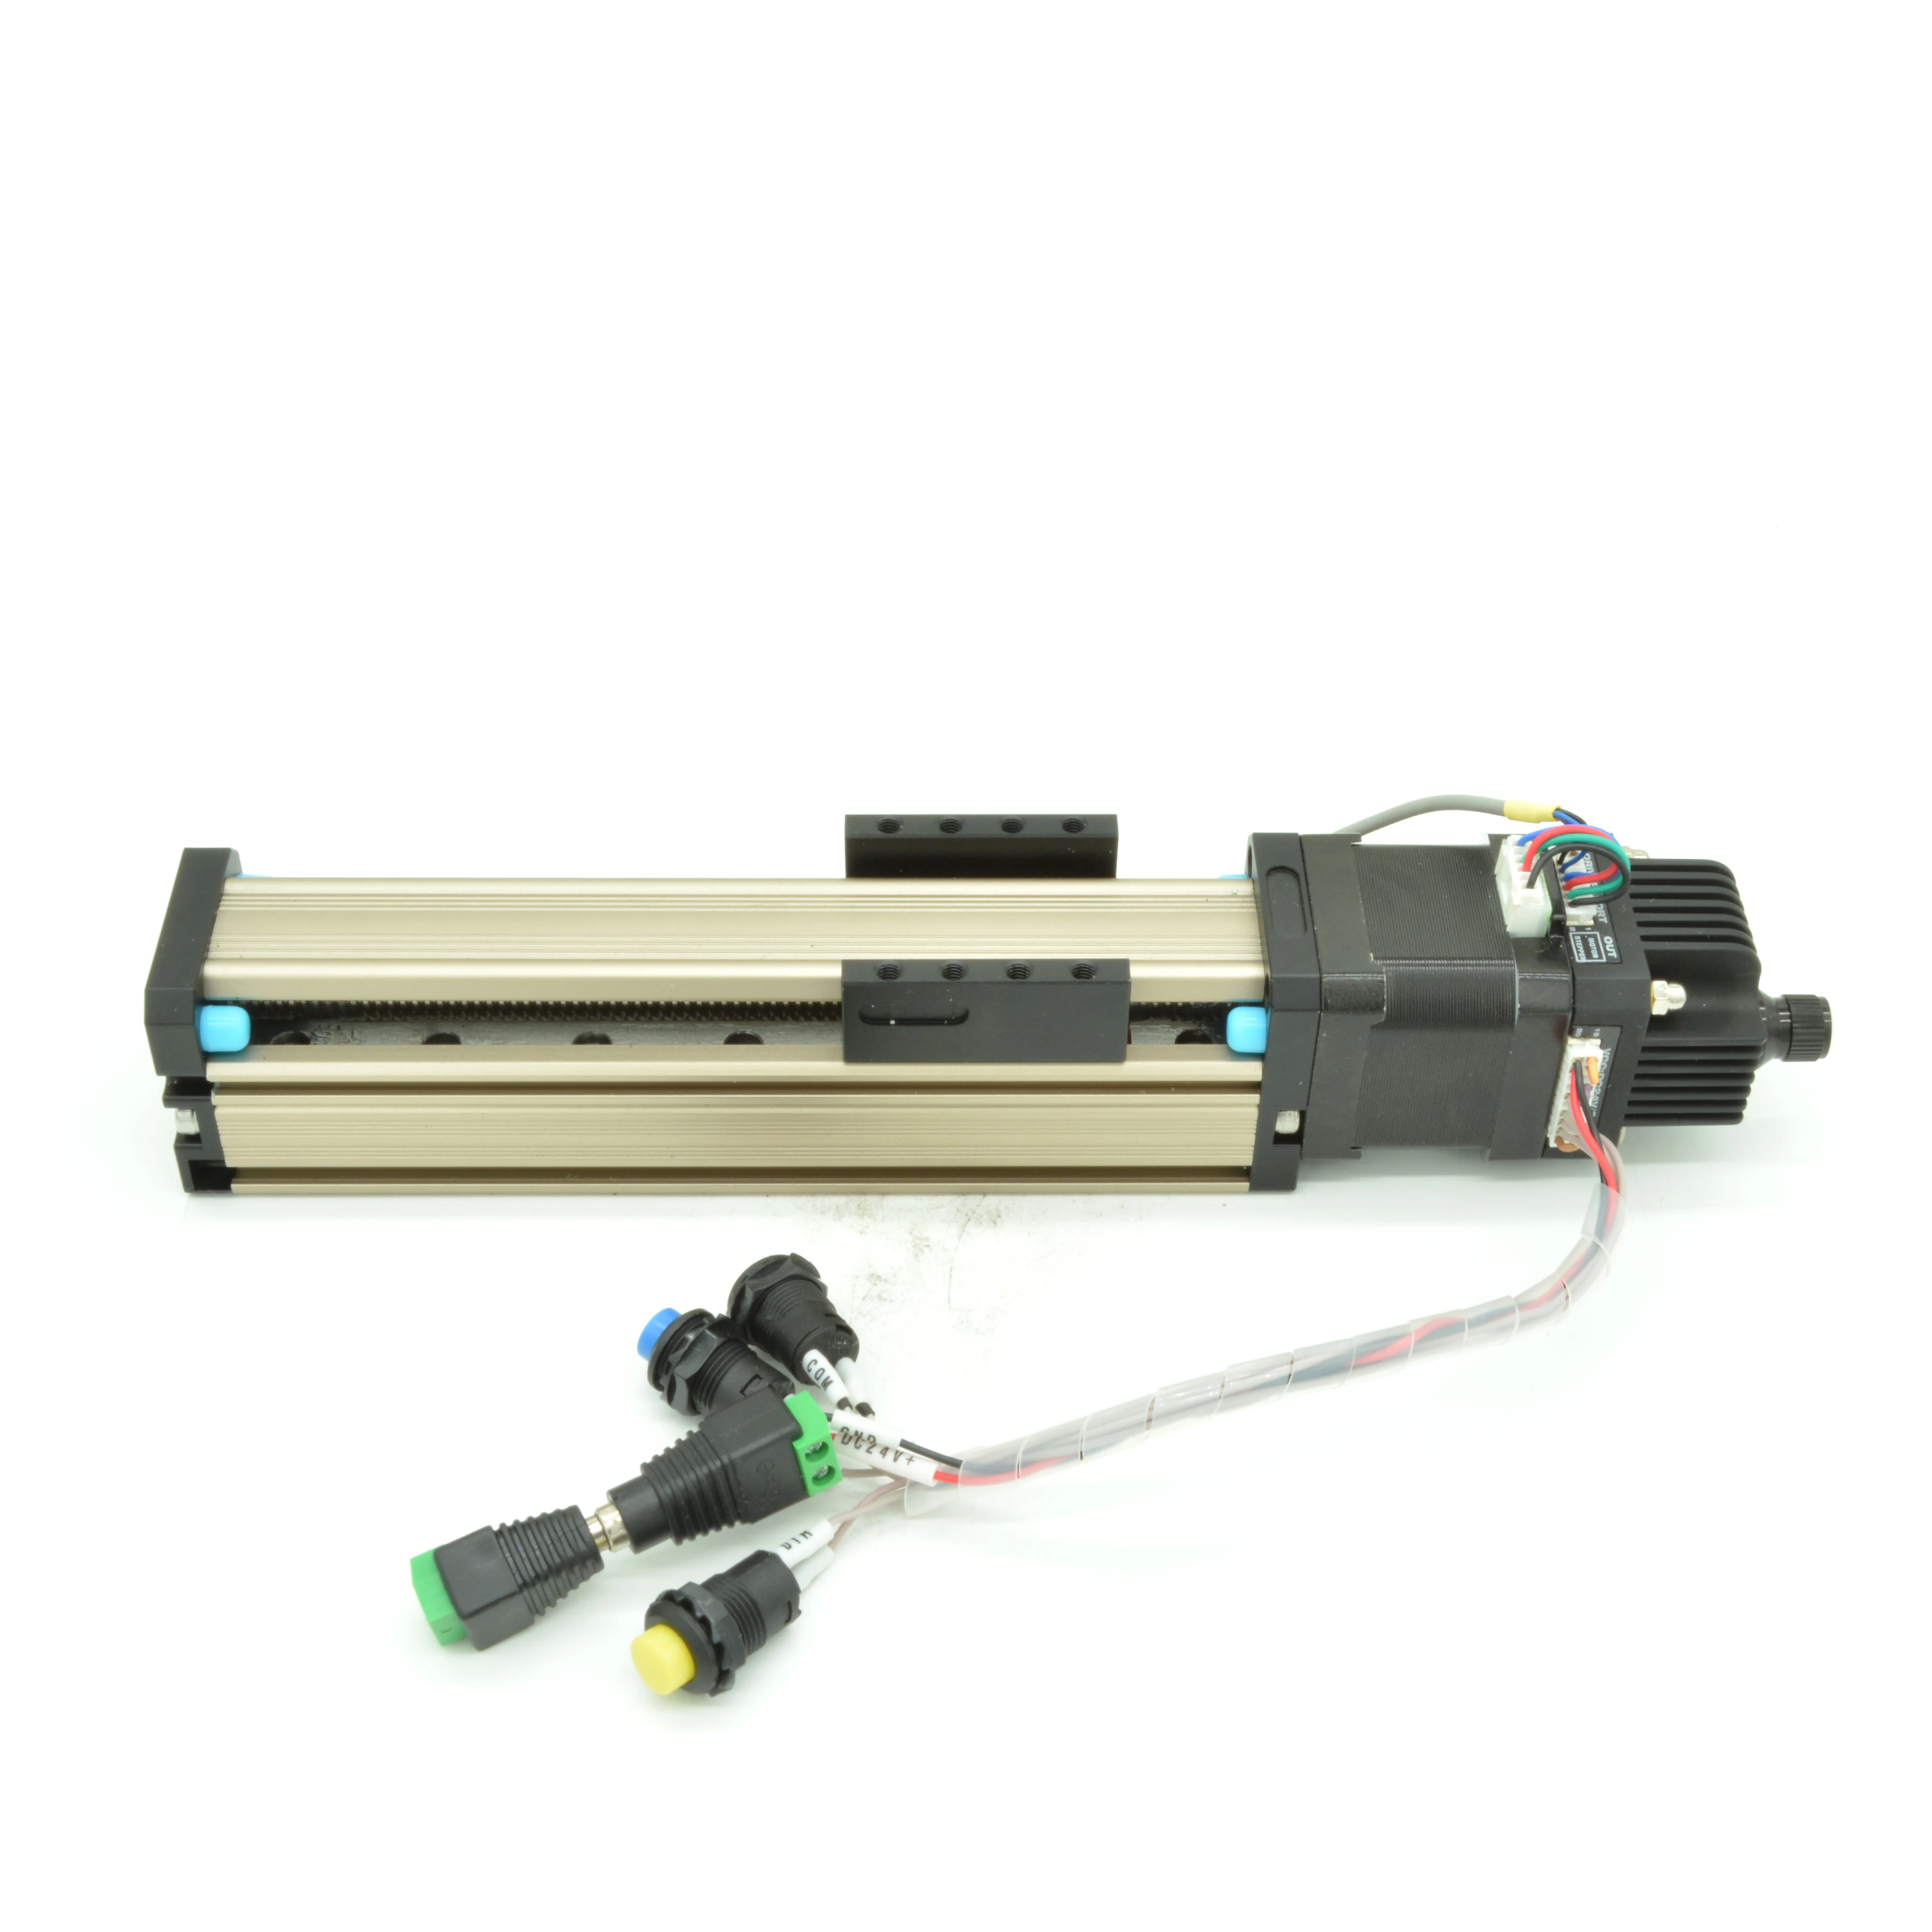 

Stepper motorized linear module 50ml syringe pump